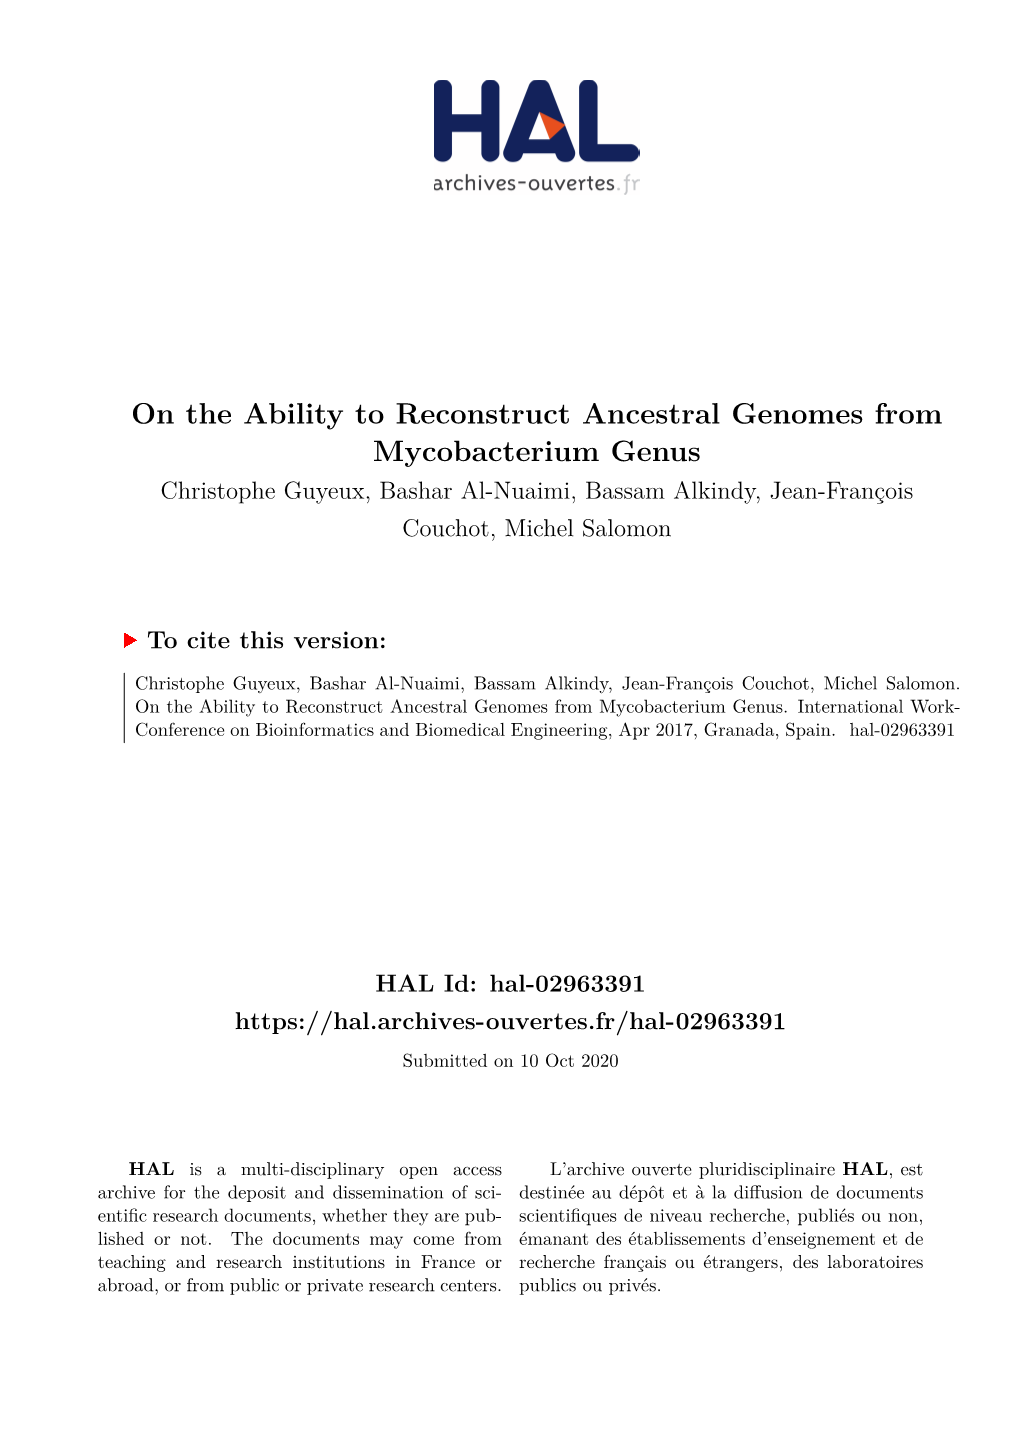 On the Ability to Reconstruct Ancestral Genomes from Mycobacterium Genus Christophe Guyeux, Bashar Al-Nuaimi, Bassam Alkindy, Jean-François Couchot, Michel Salomon